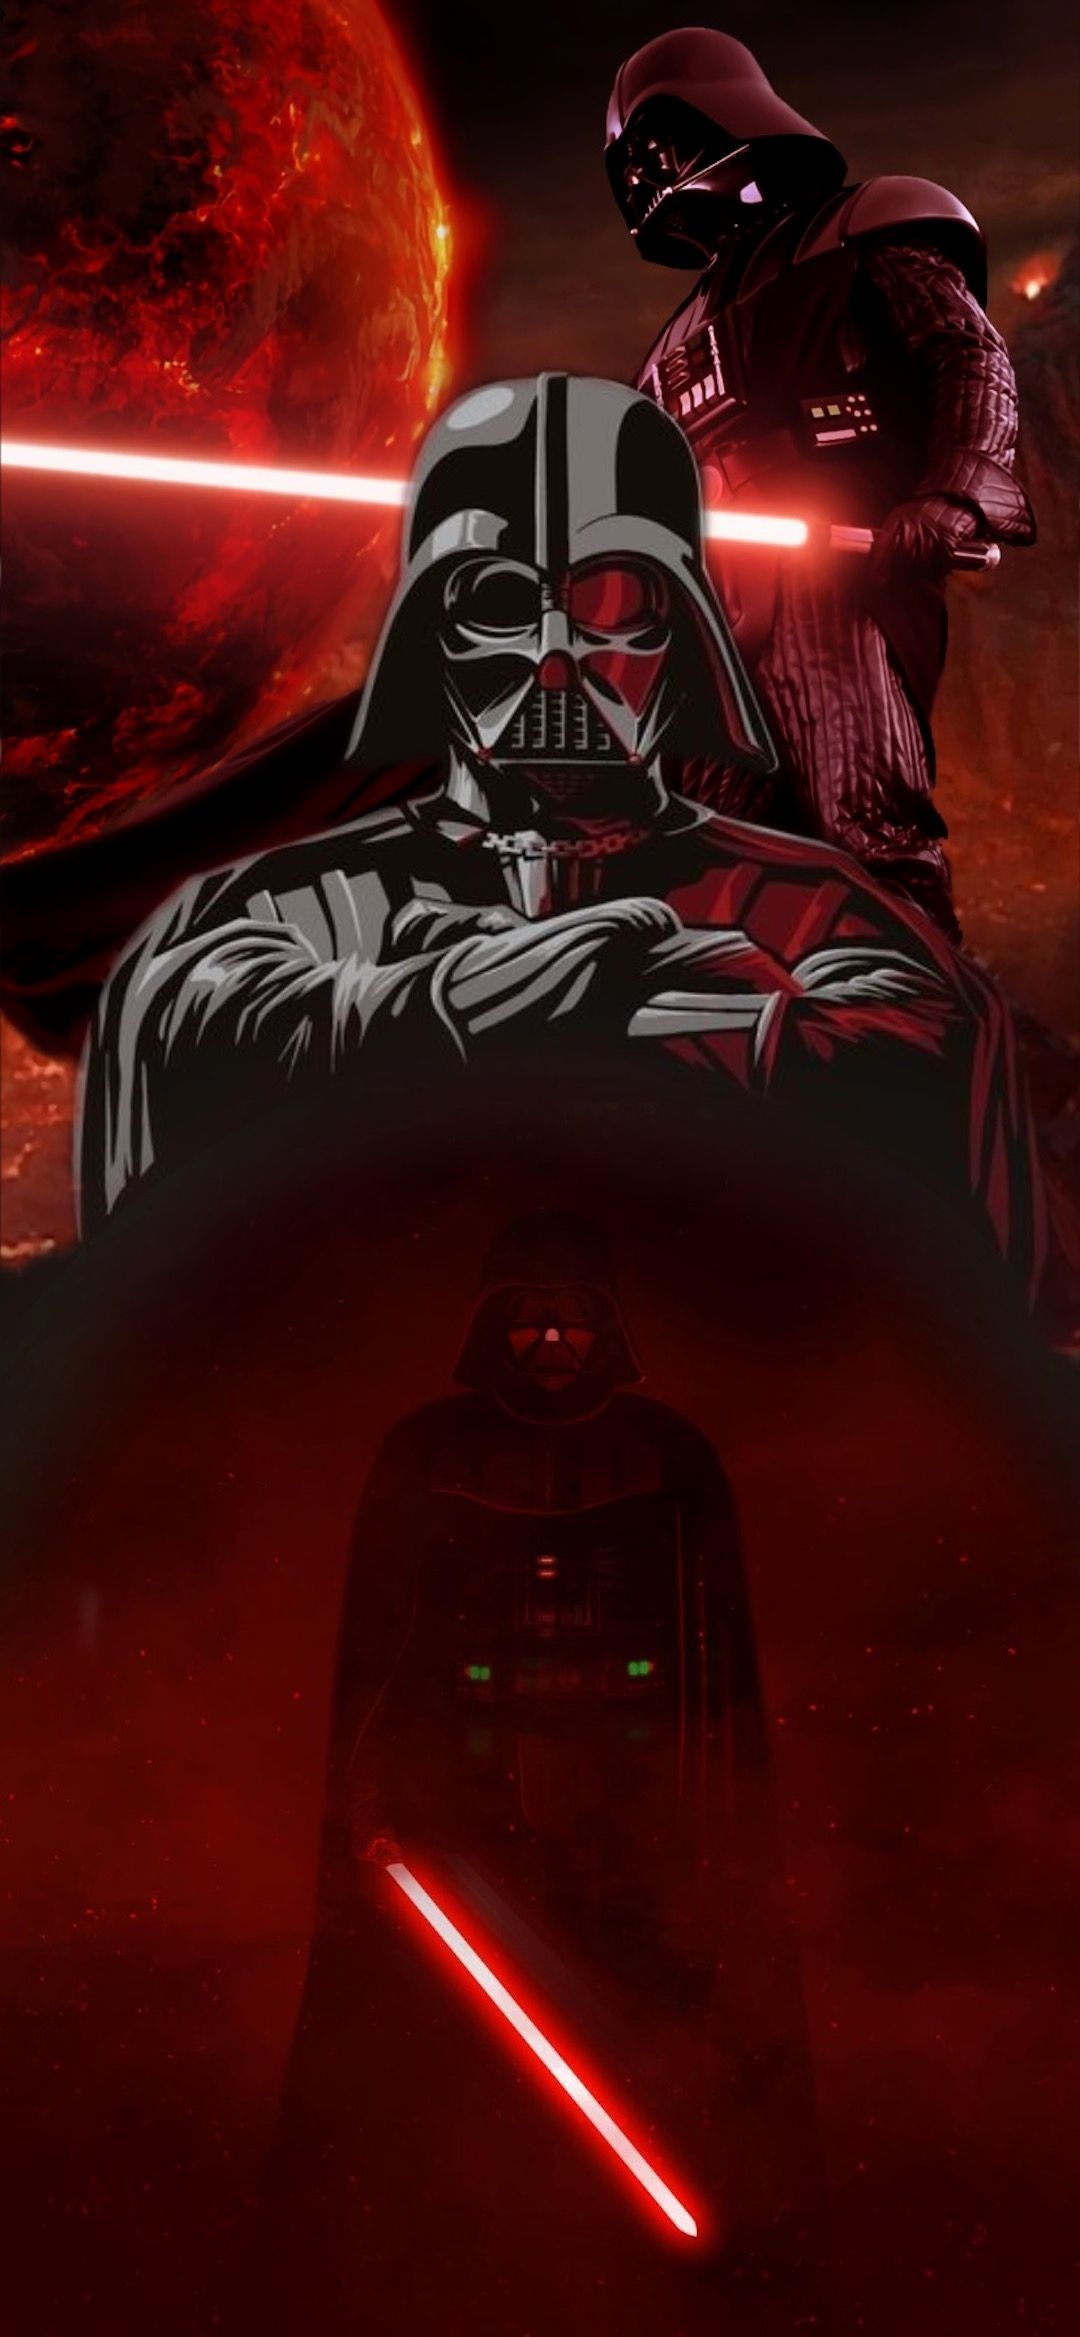 Darth Vader iPhone Wallpaper Free Darth Vader iPhone